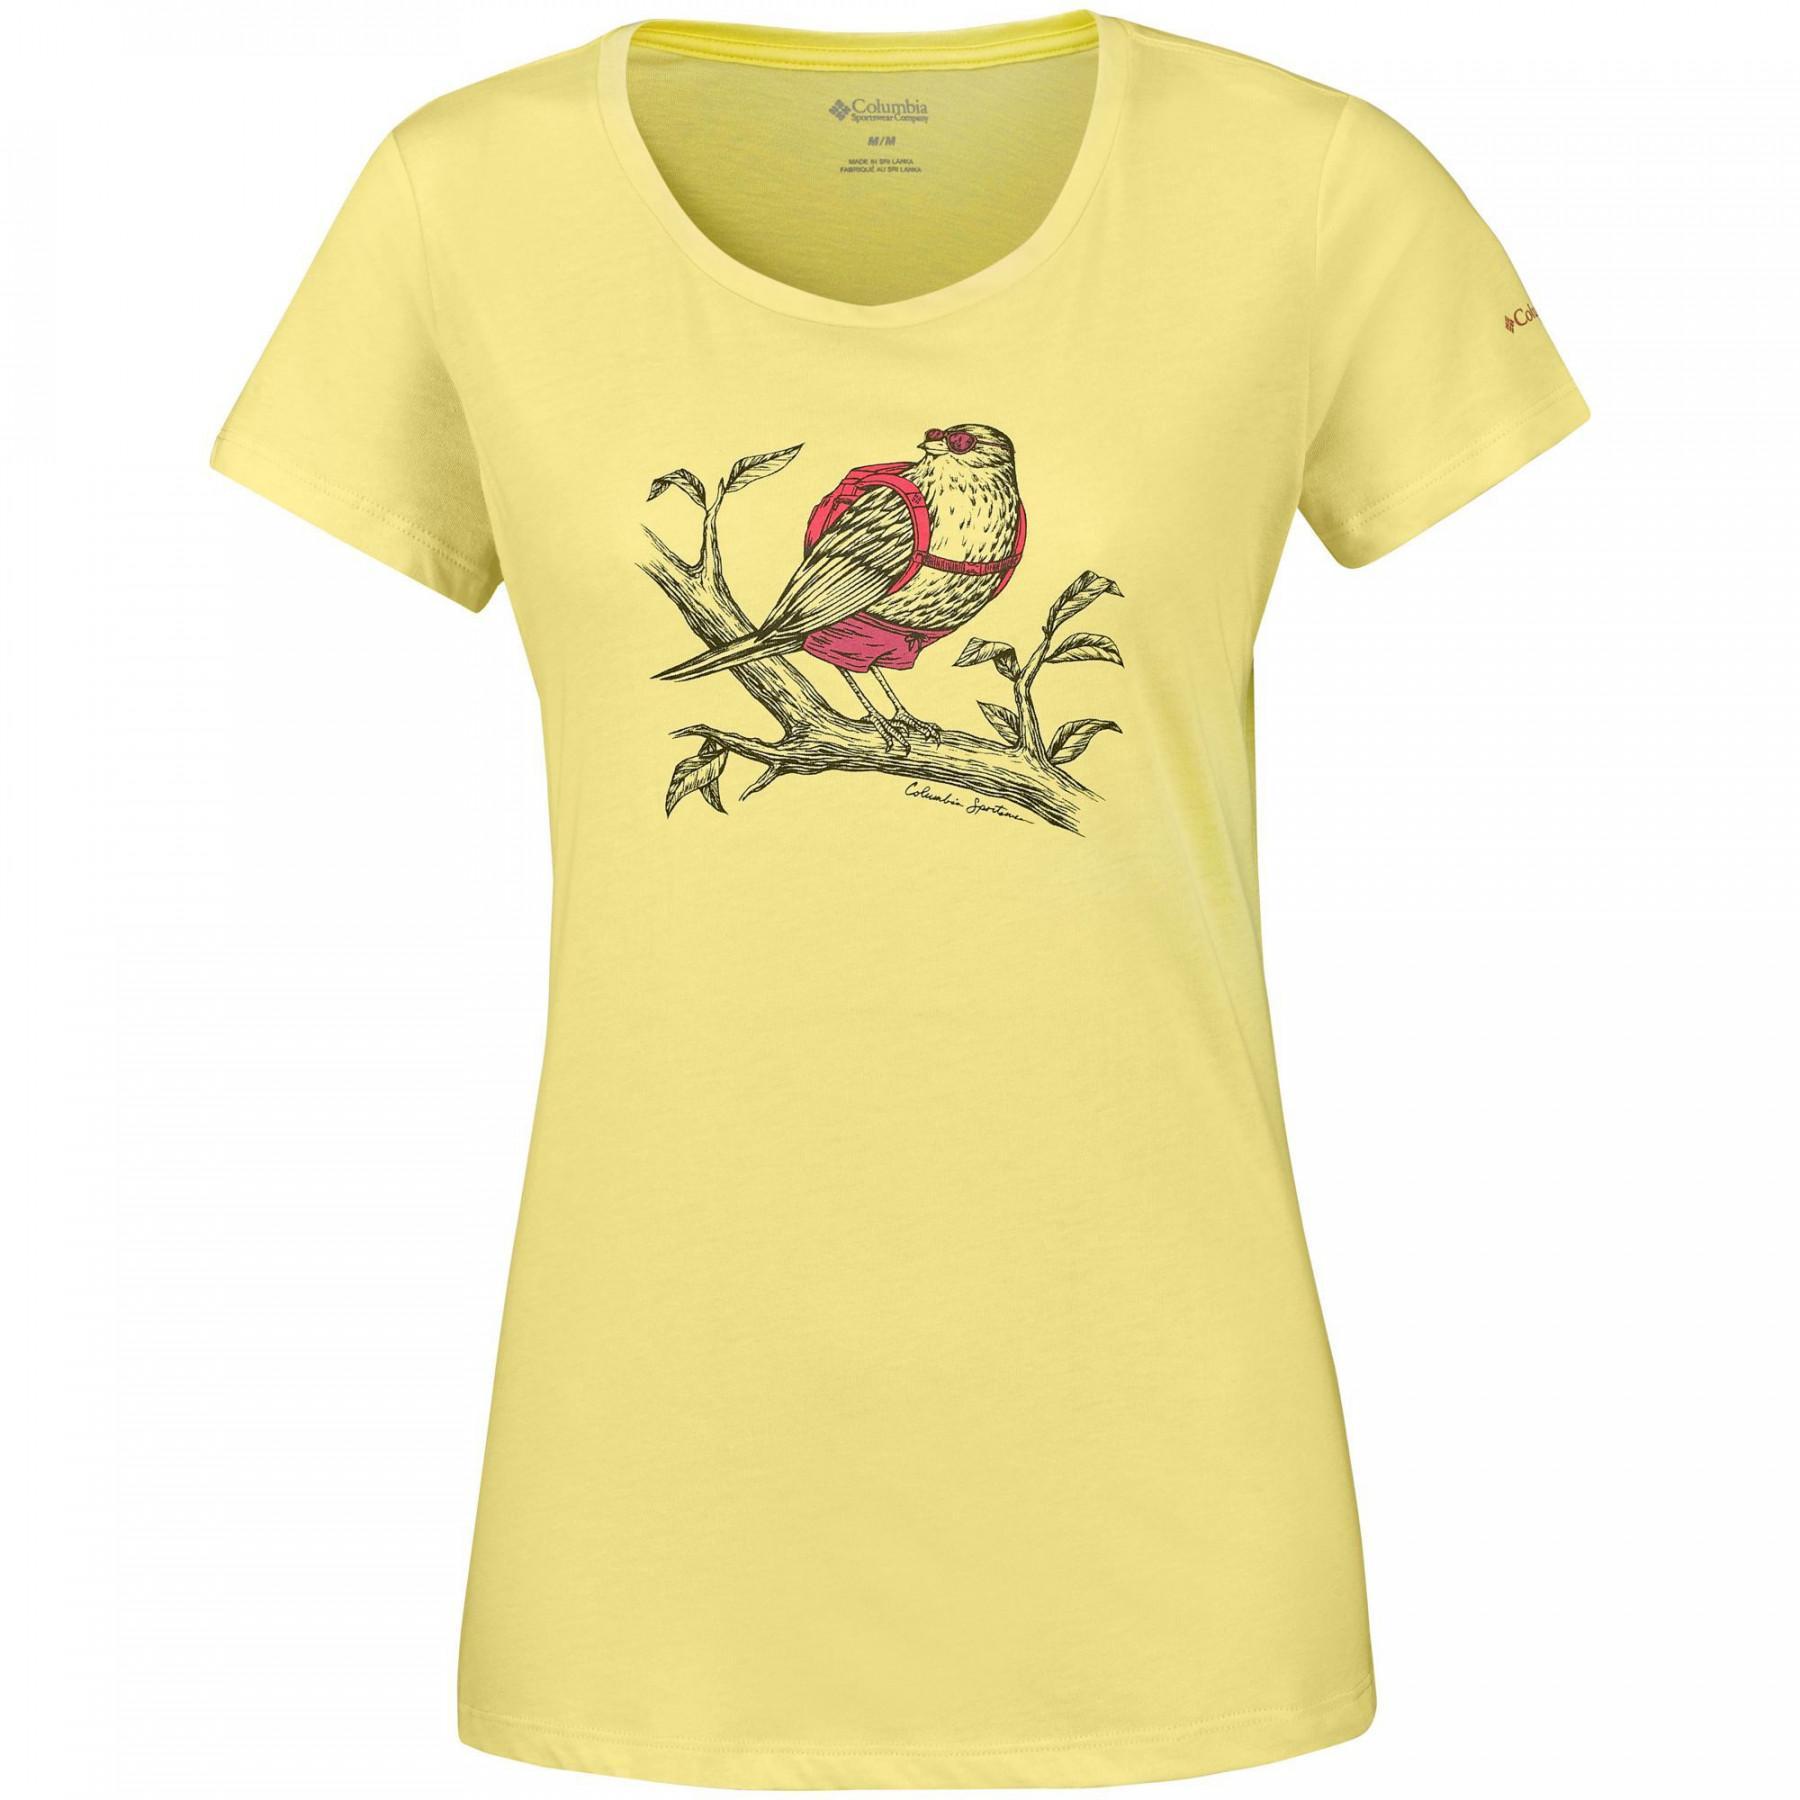 Camiseta feminina Columbia Birdy Buddy